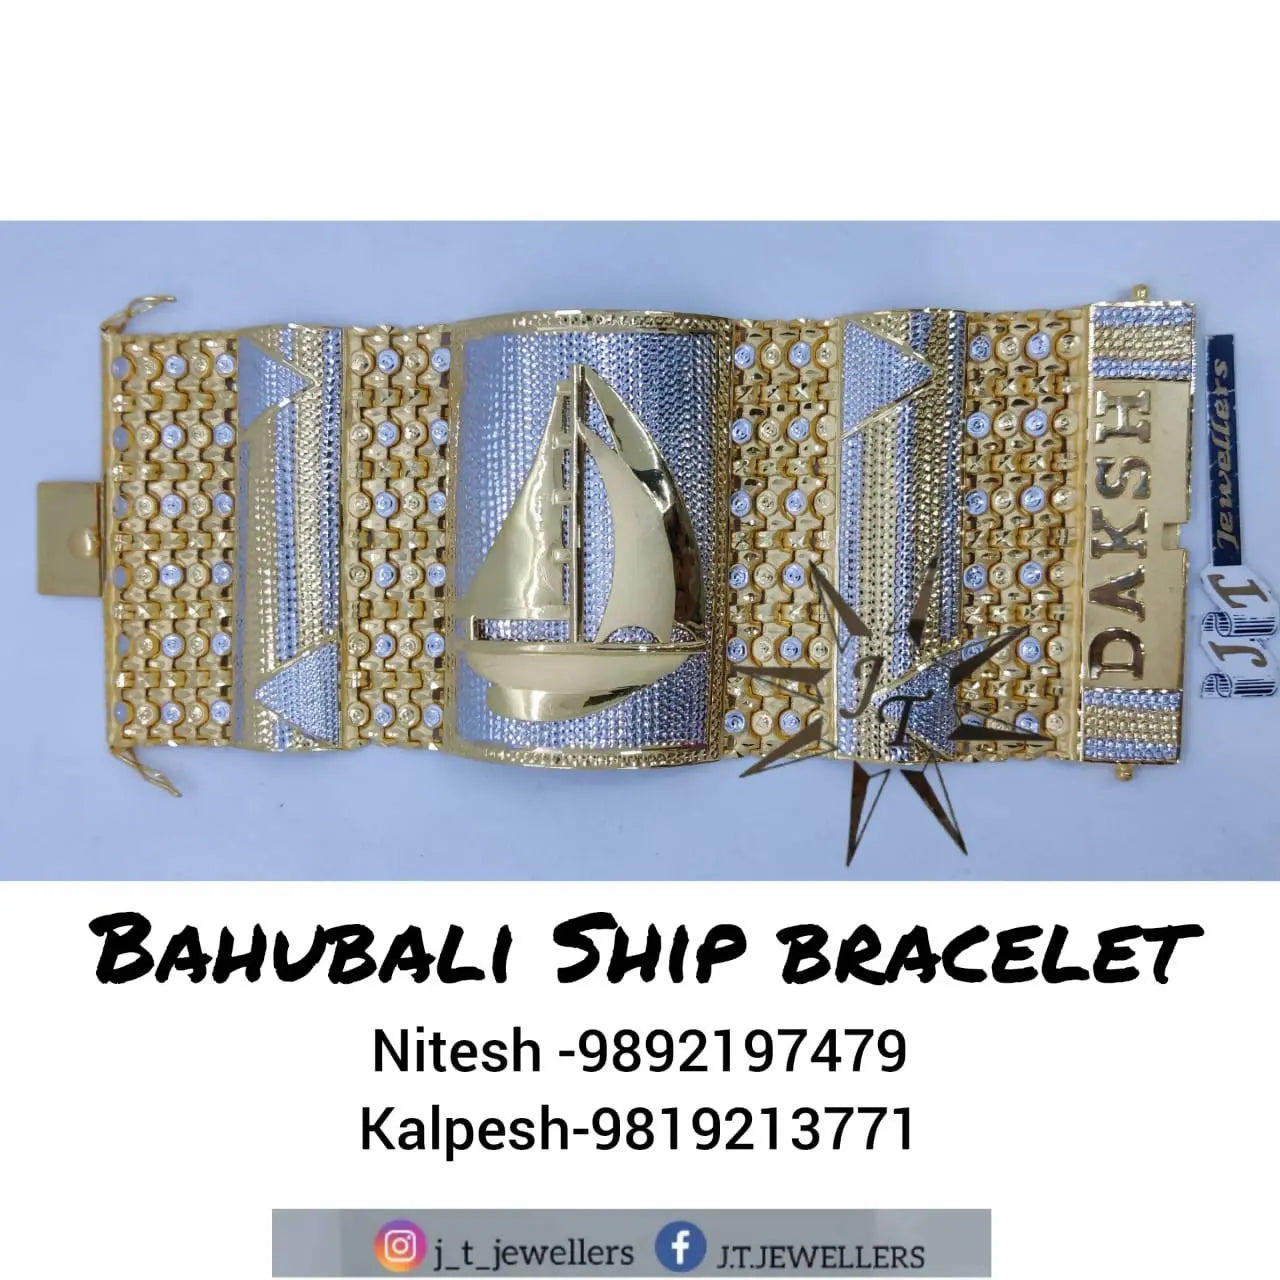 Bahubali Ship Bracelet Sarafa Bazar India